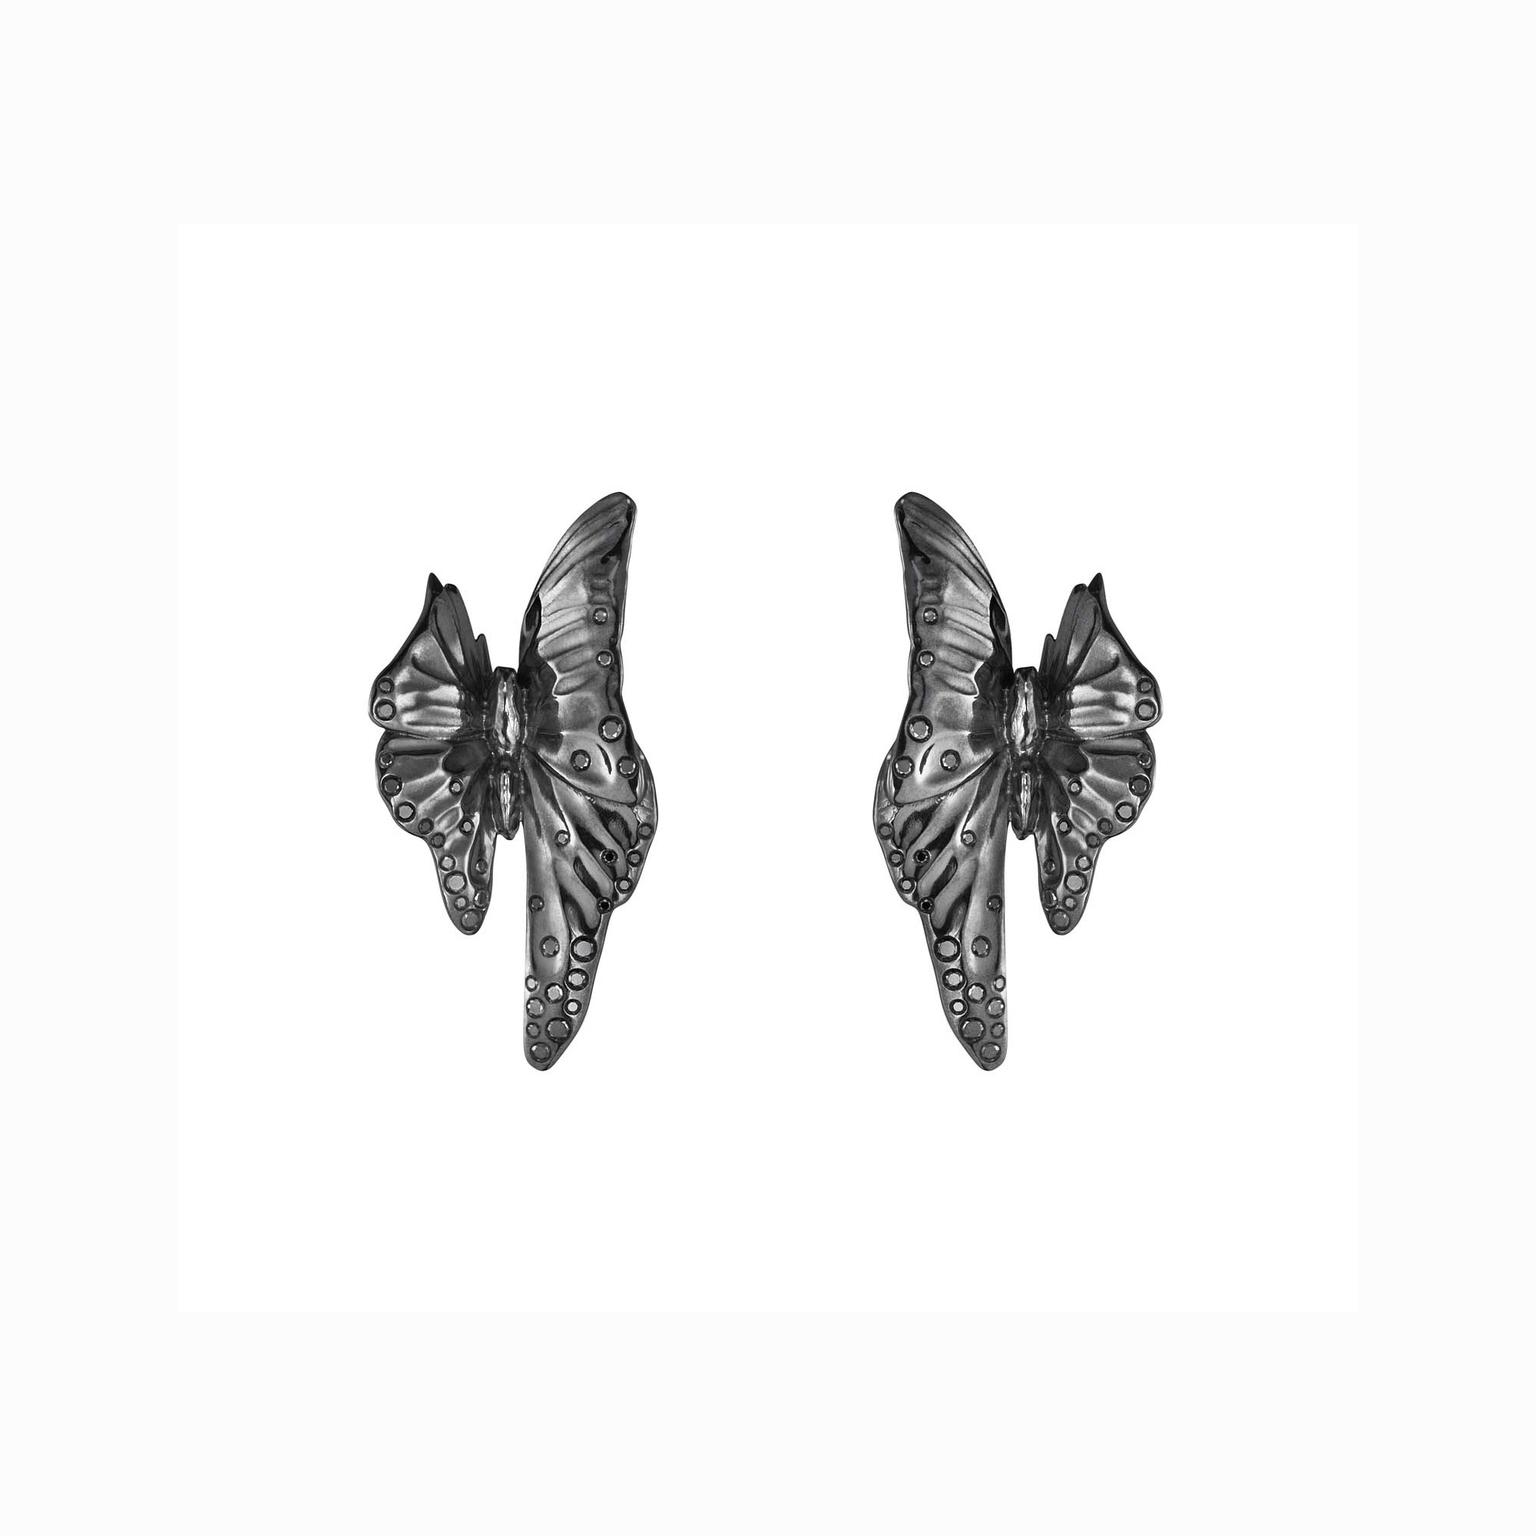 Jordan Askill for Georg Jensen butterfly earrings